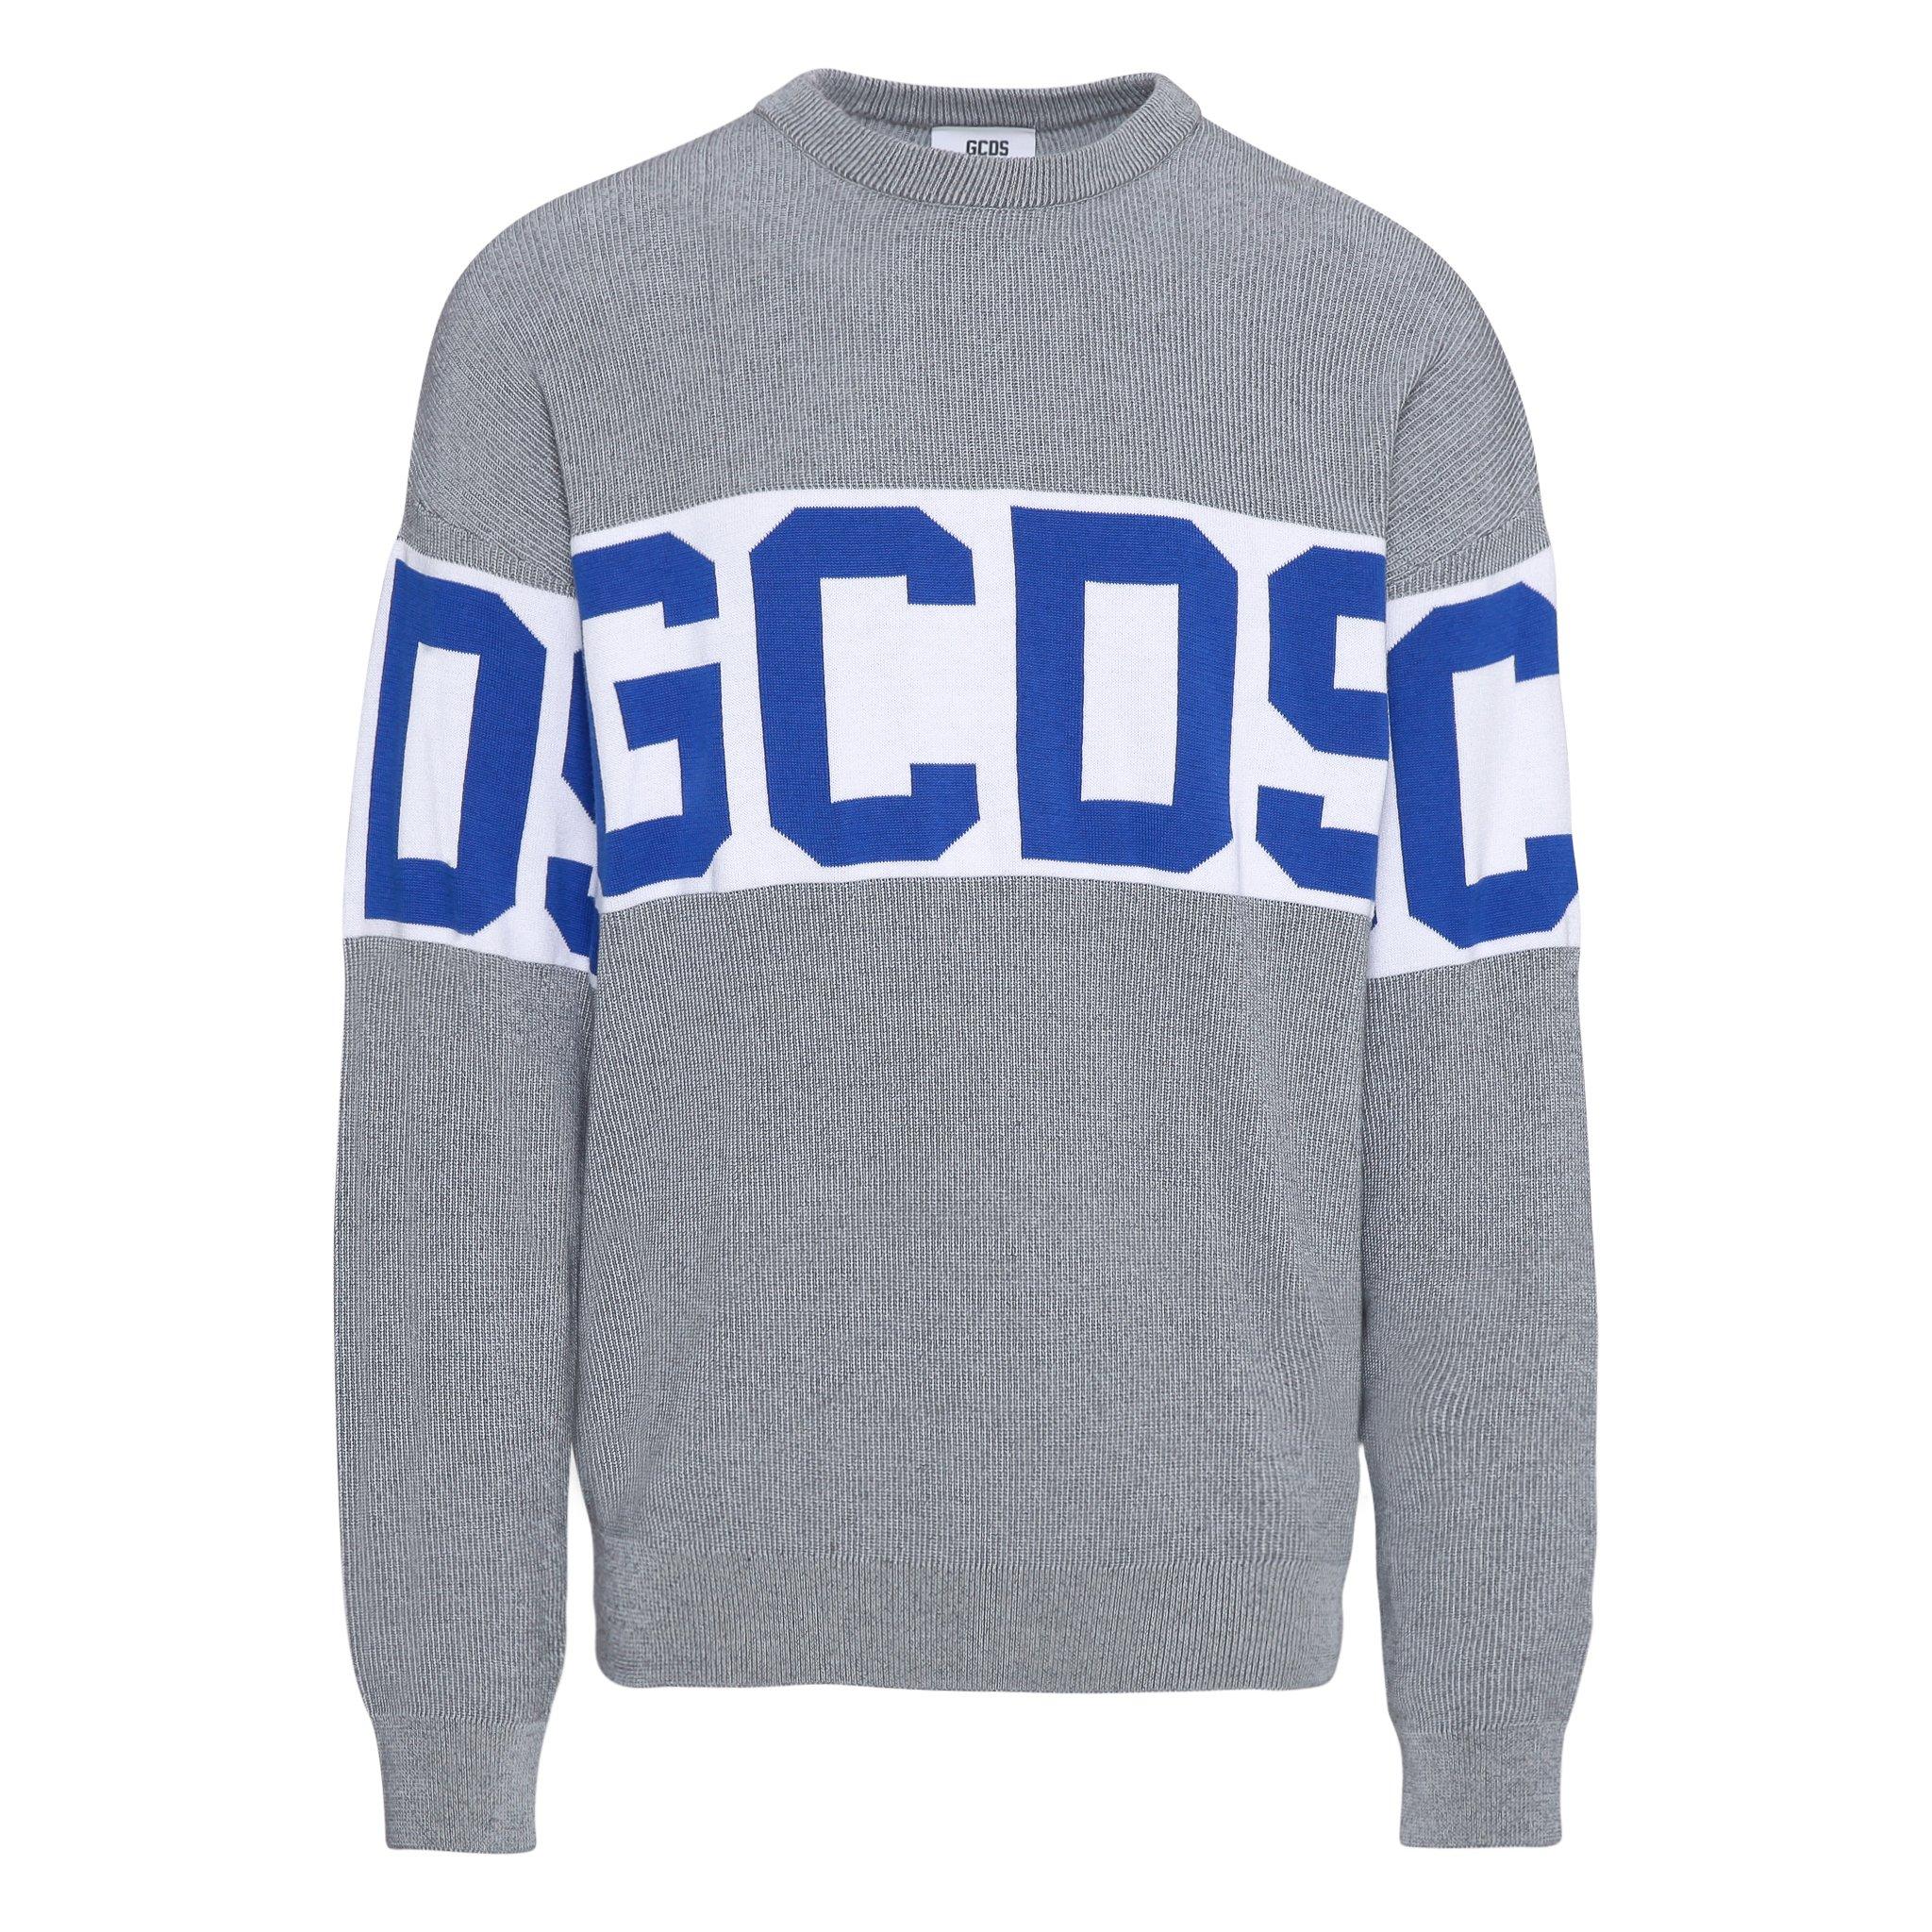 Gcds Cotton Logo Sweater in Grey (Gray) for Men - Lyst